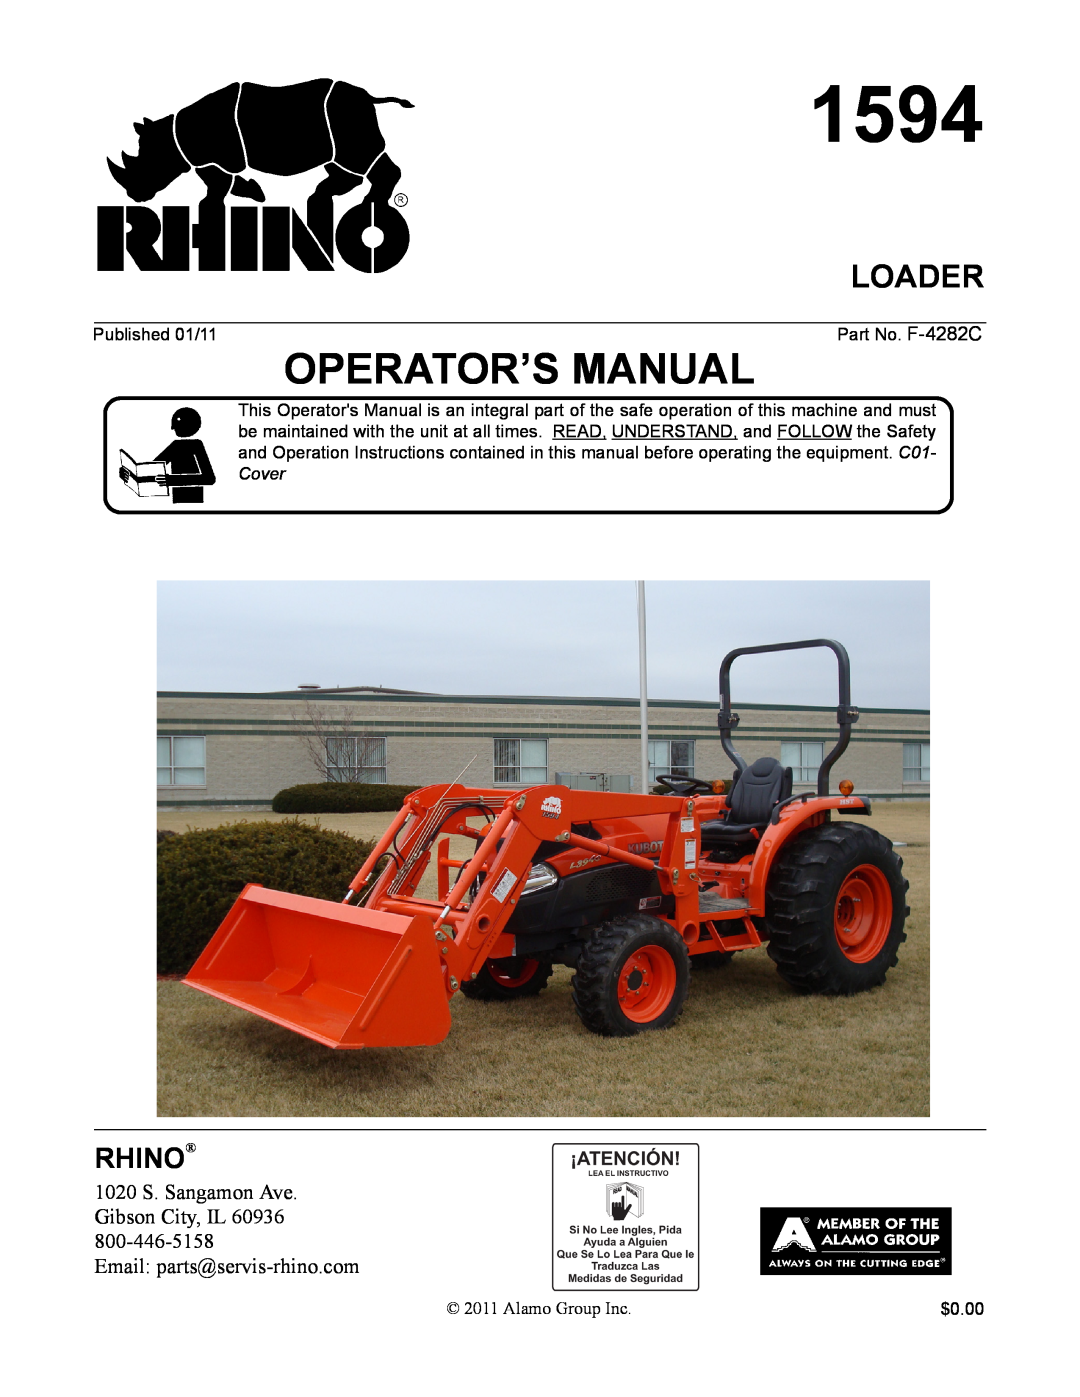 Rhino Mounts 1594 manual Loader, Operator’S Manual, Rhino, 1020 S. Sangamon Ave Gibson City, IL 